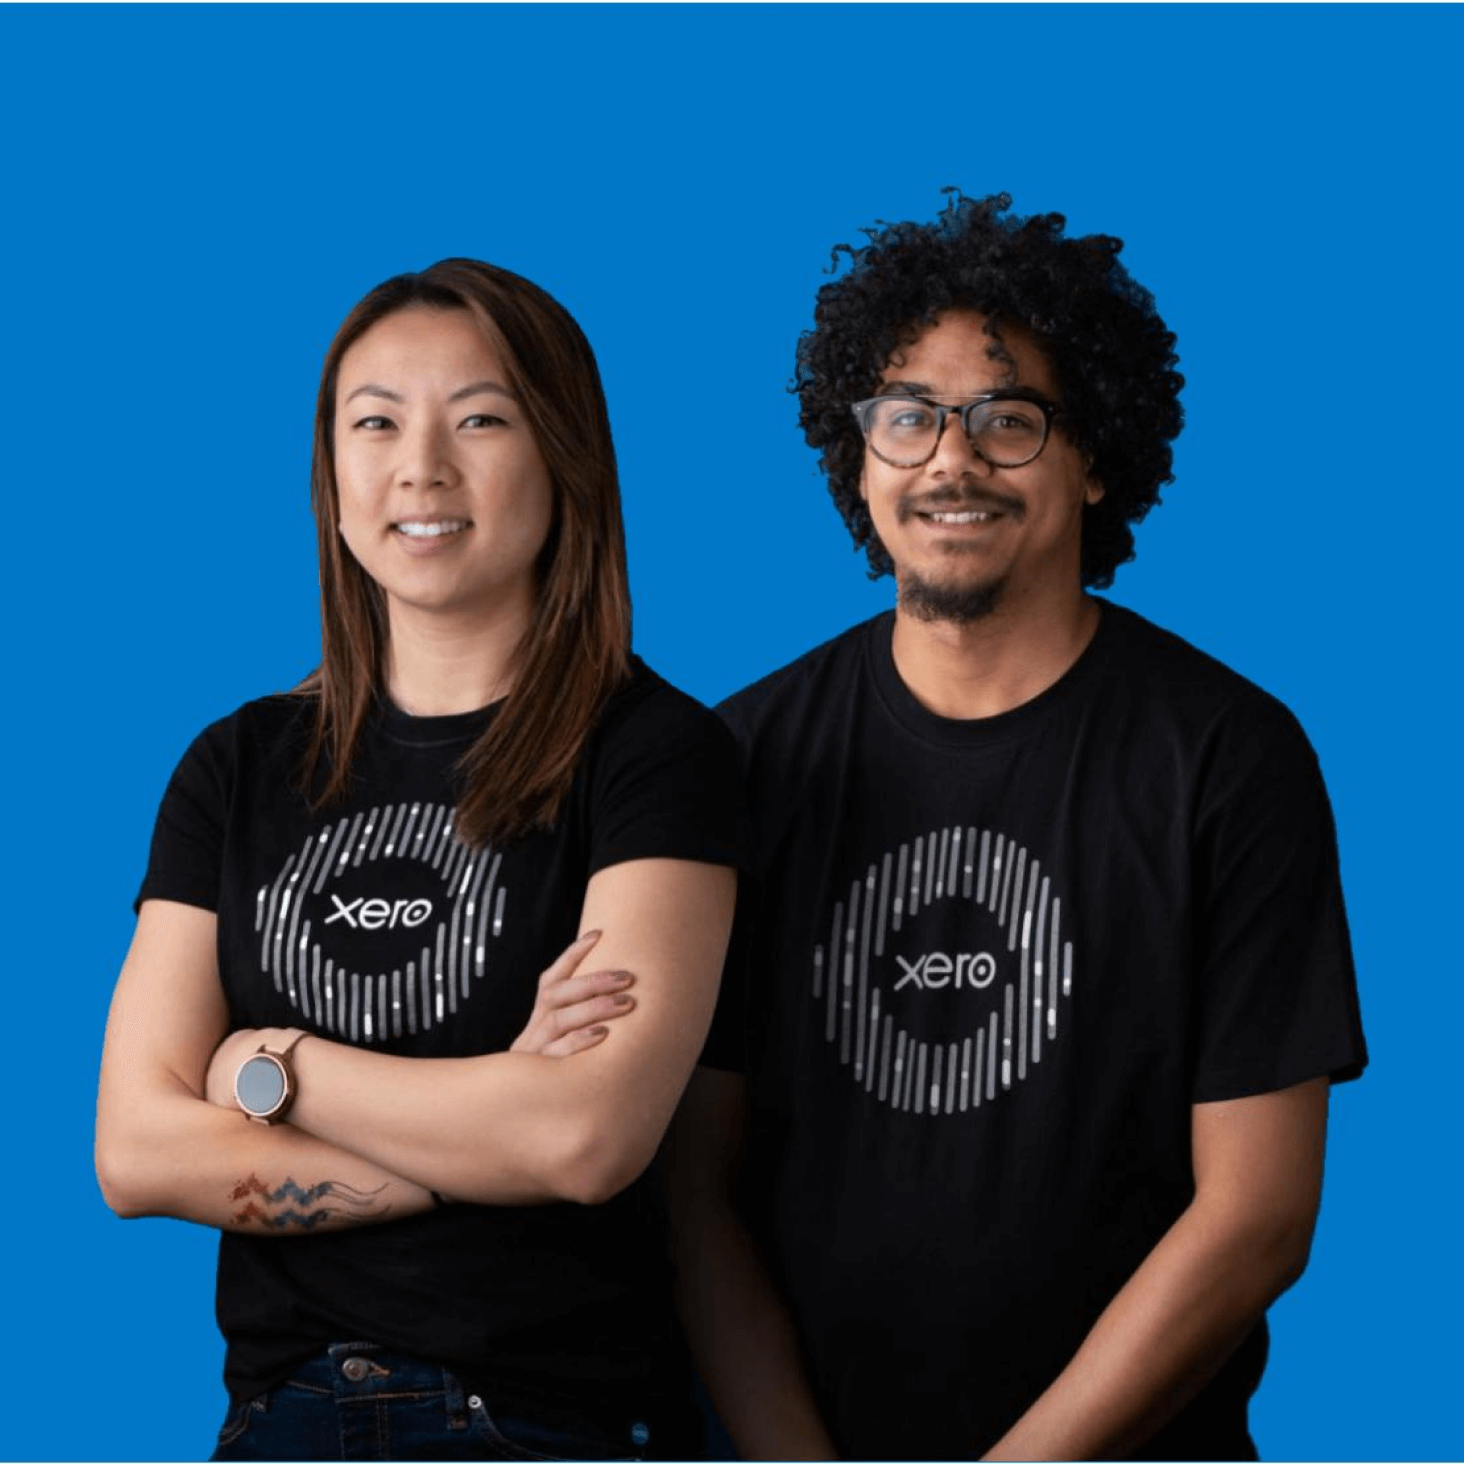 Two members of the Xero team smiling, wearing black Xero t-shirts.